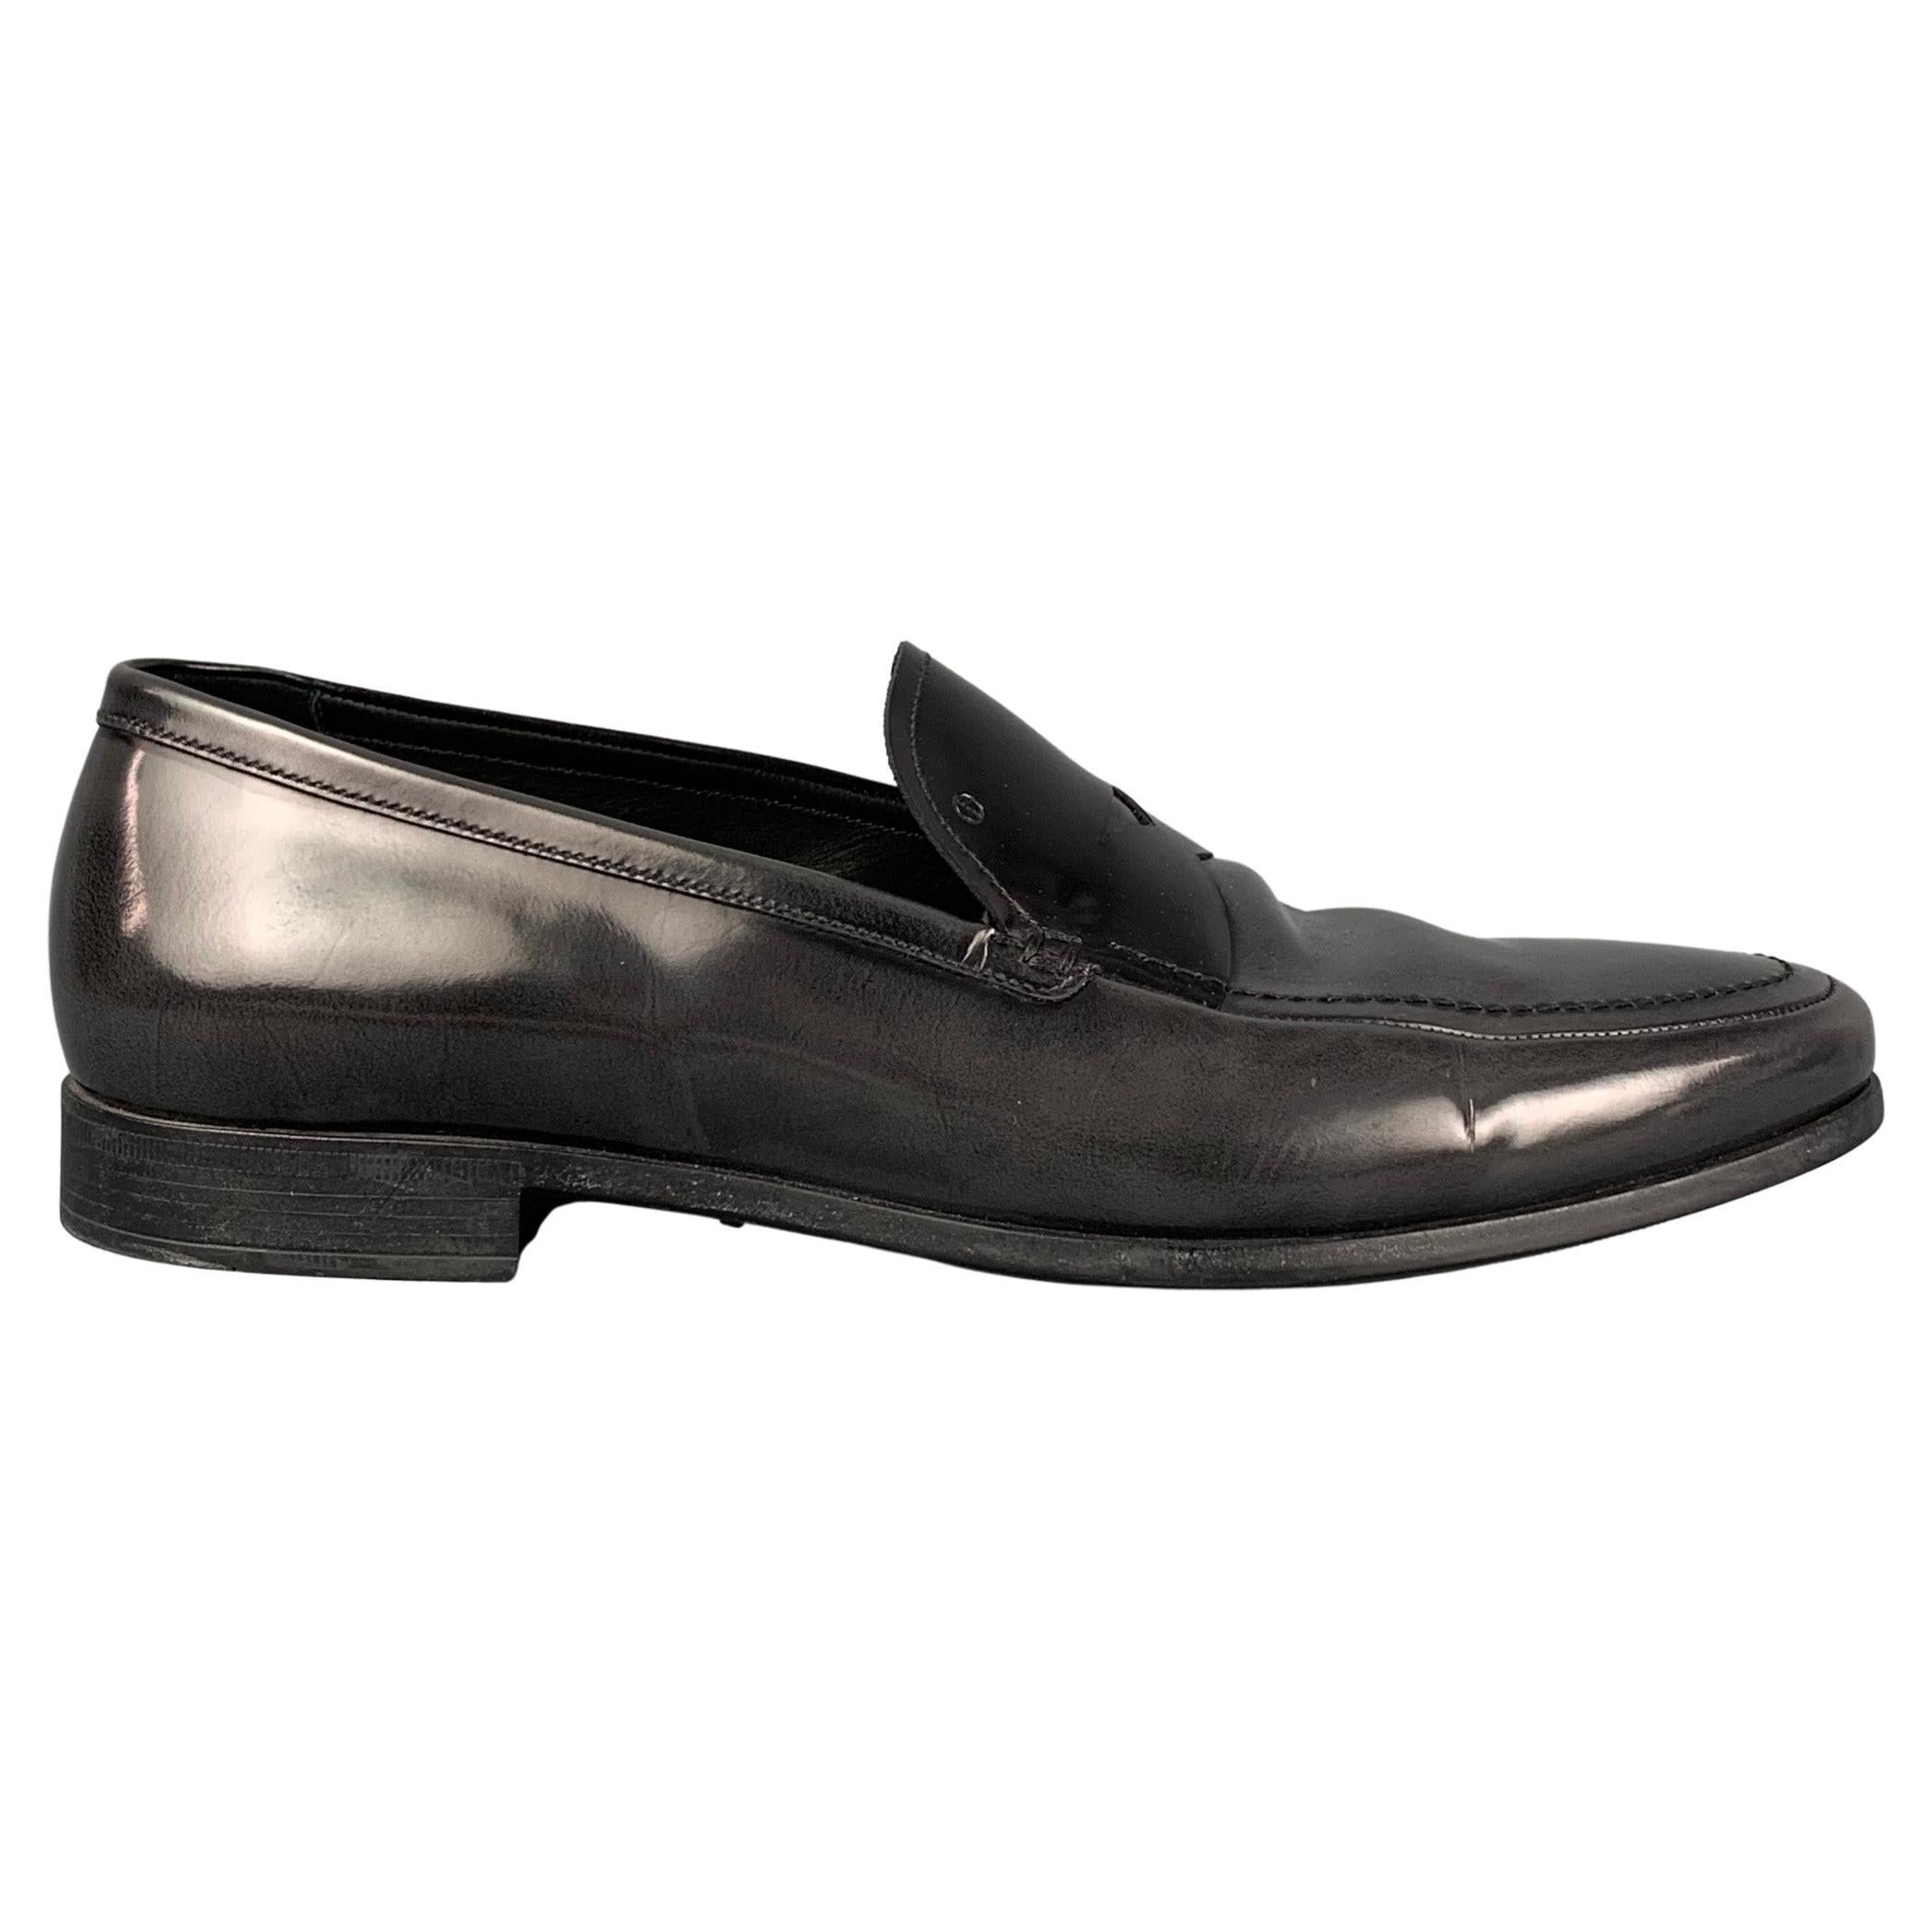 New Giorgio Armani Swarovski Embellished Loafers Slippers Flat Shoes It ...